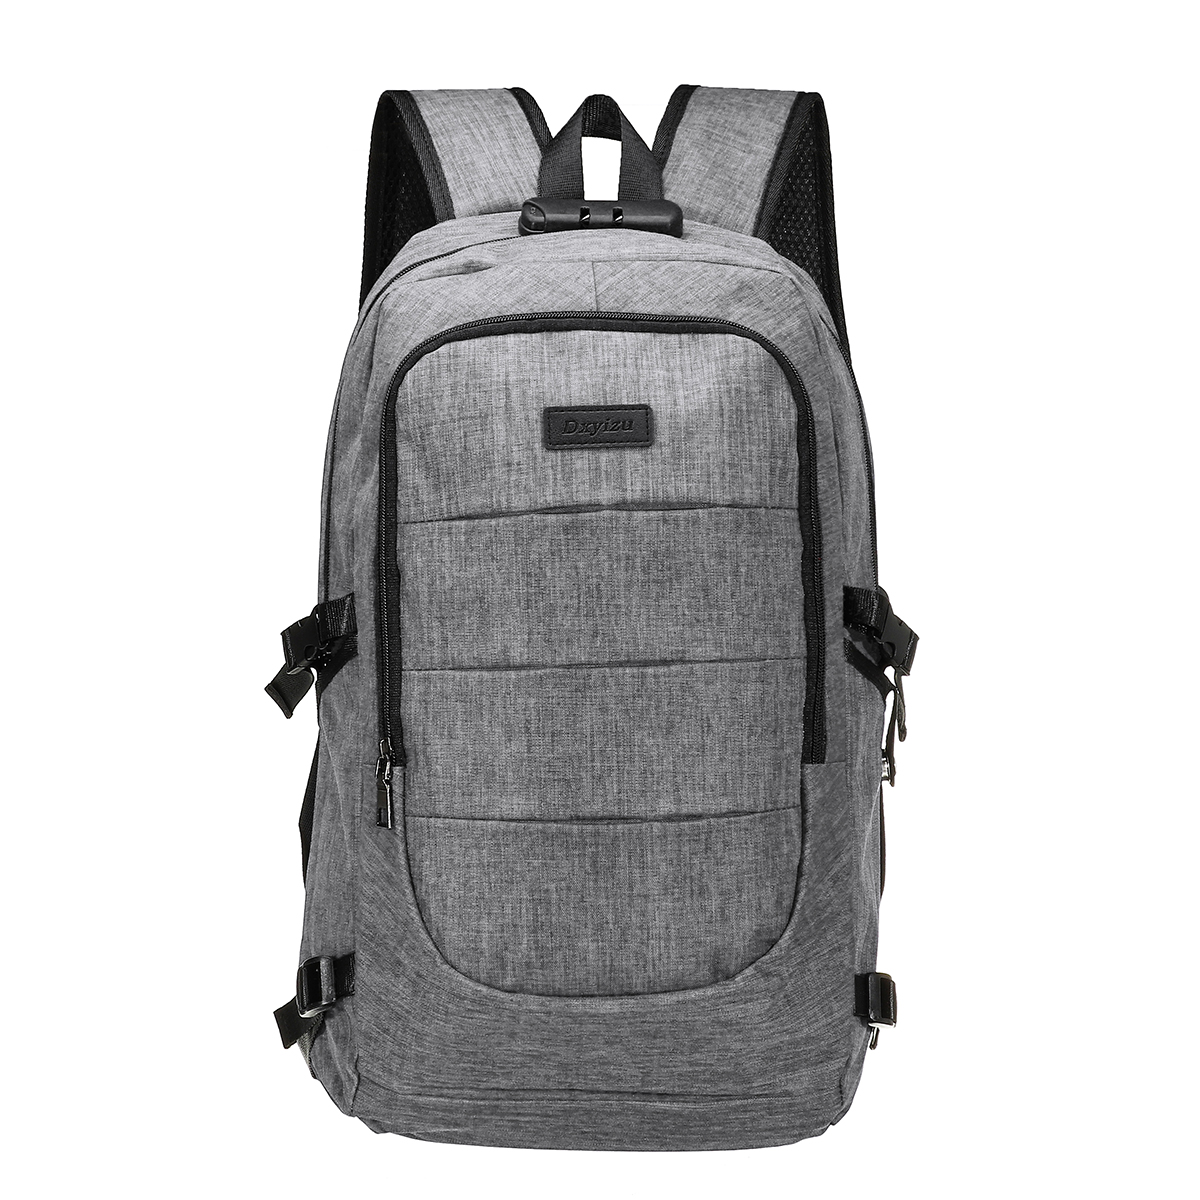 Unisex-Anti-Theft-Laptop-Backpack-Travel-Business-School-Bag-Rucksack-With-Safe-Lock--USB-Port-1651517-6